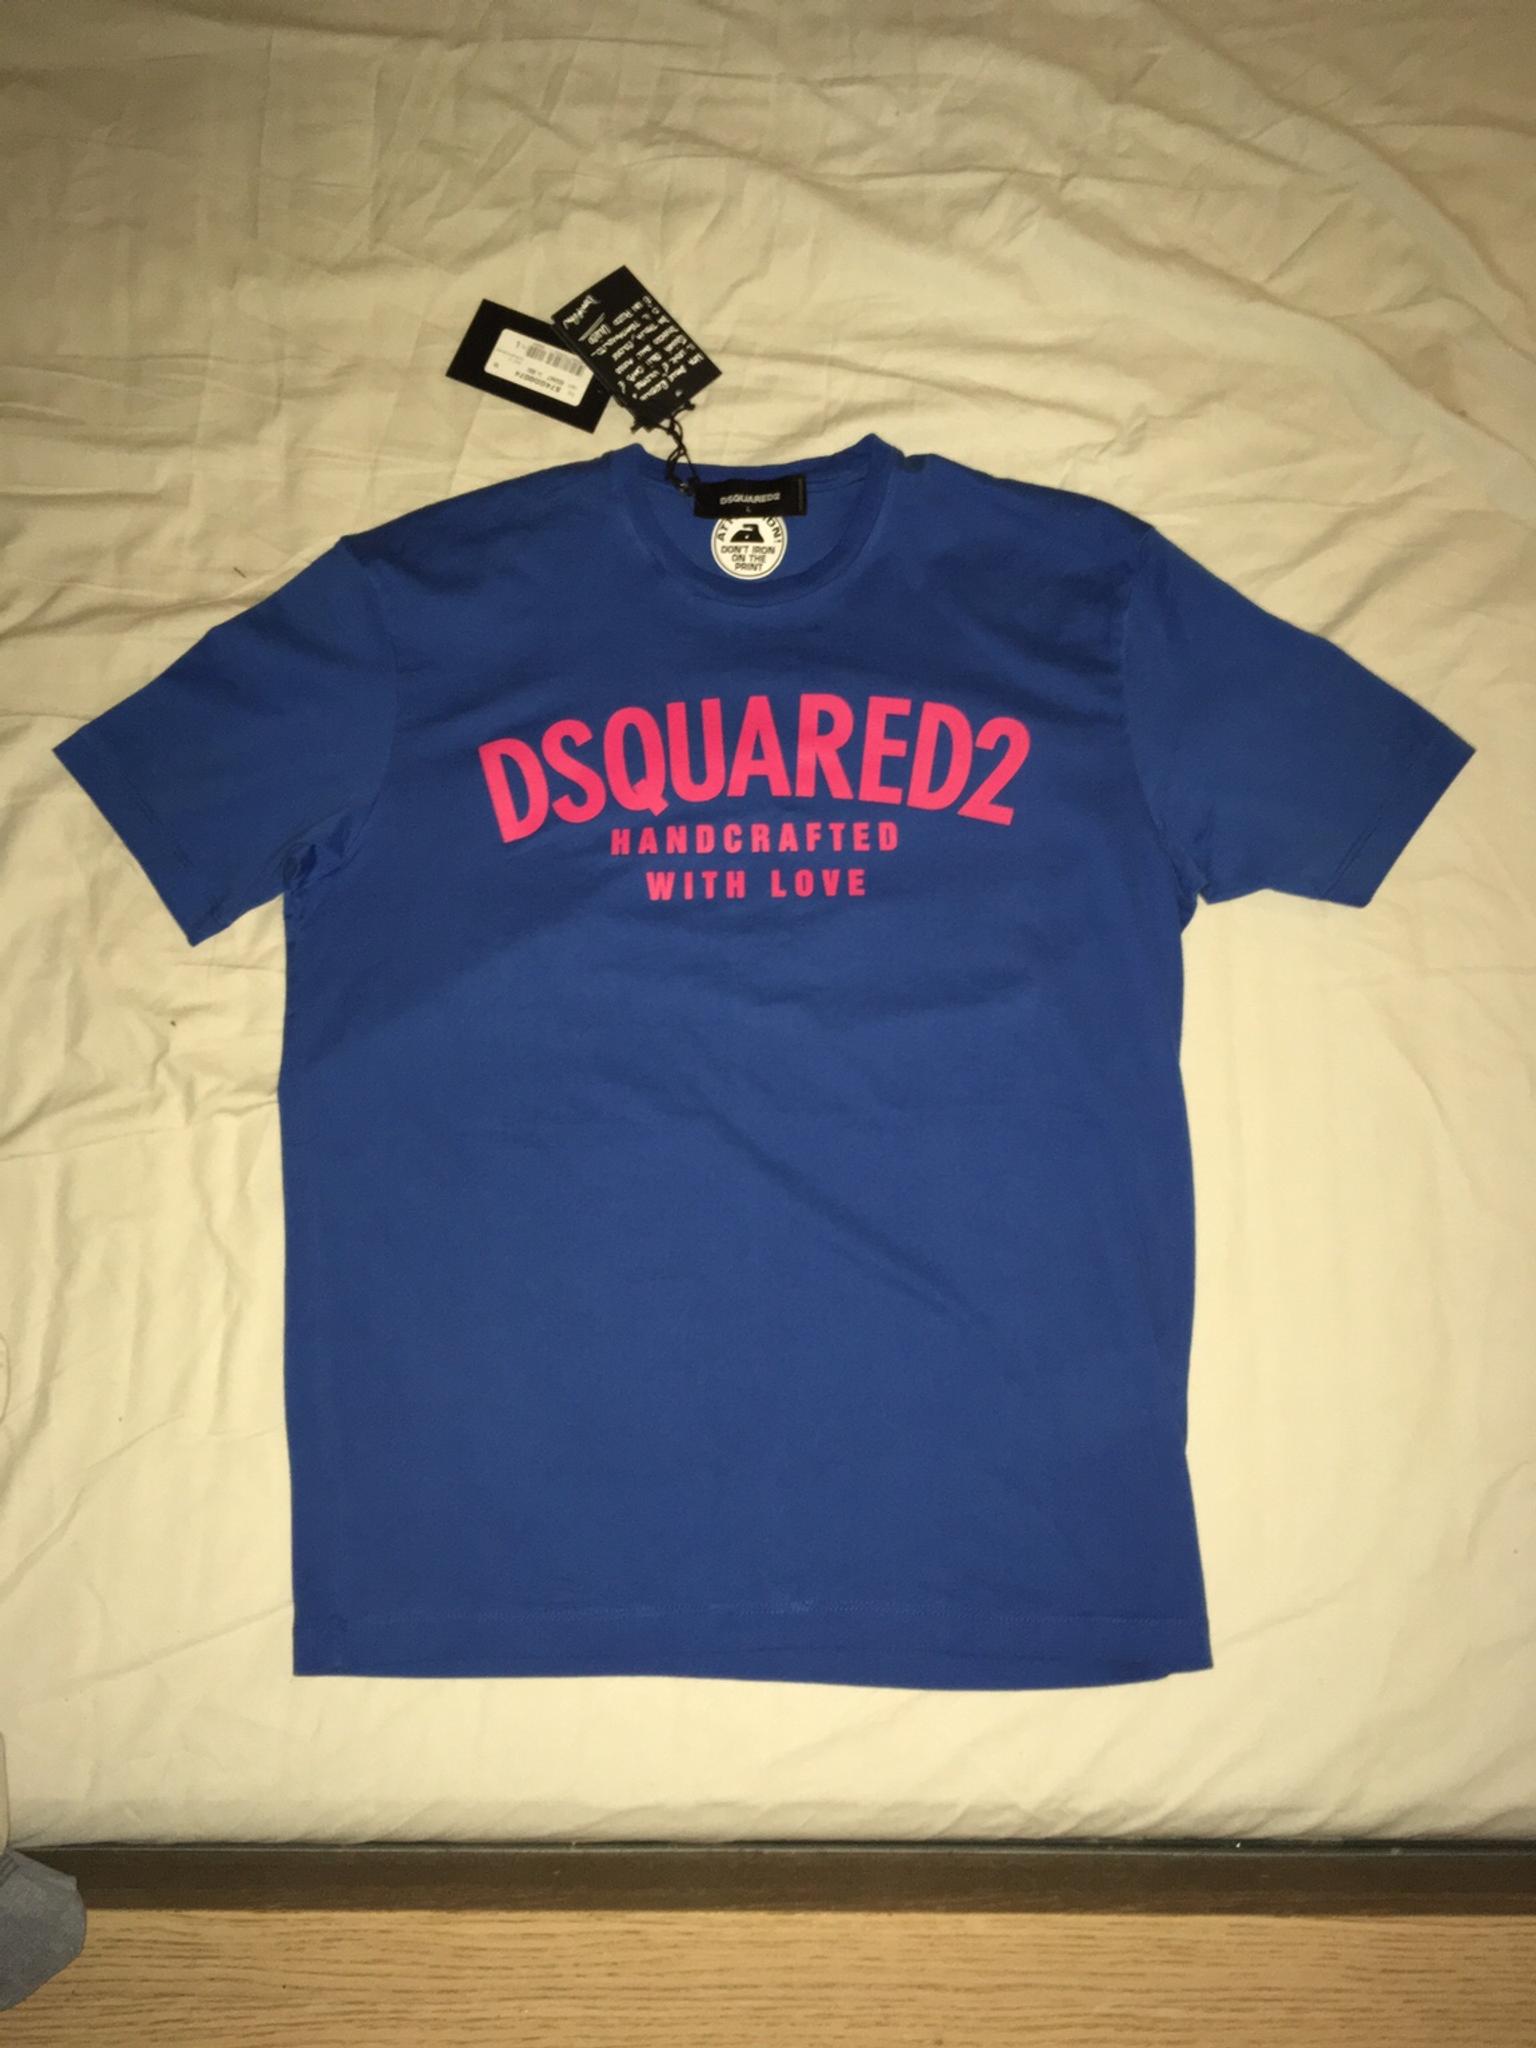 dsquared t shirt blue